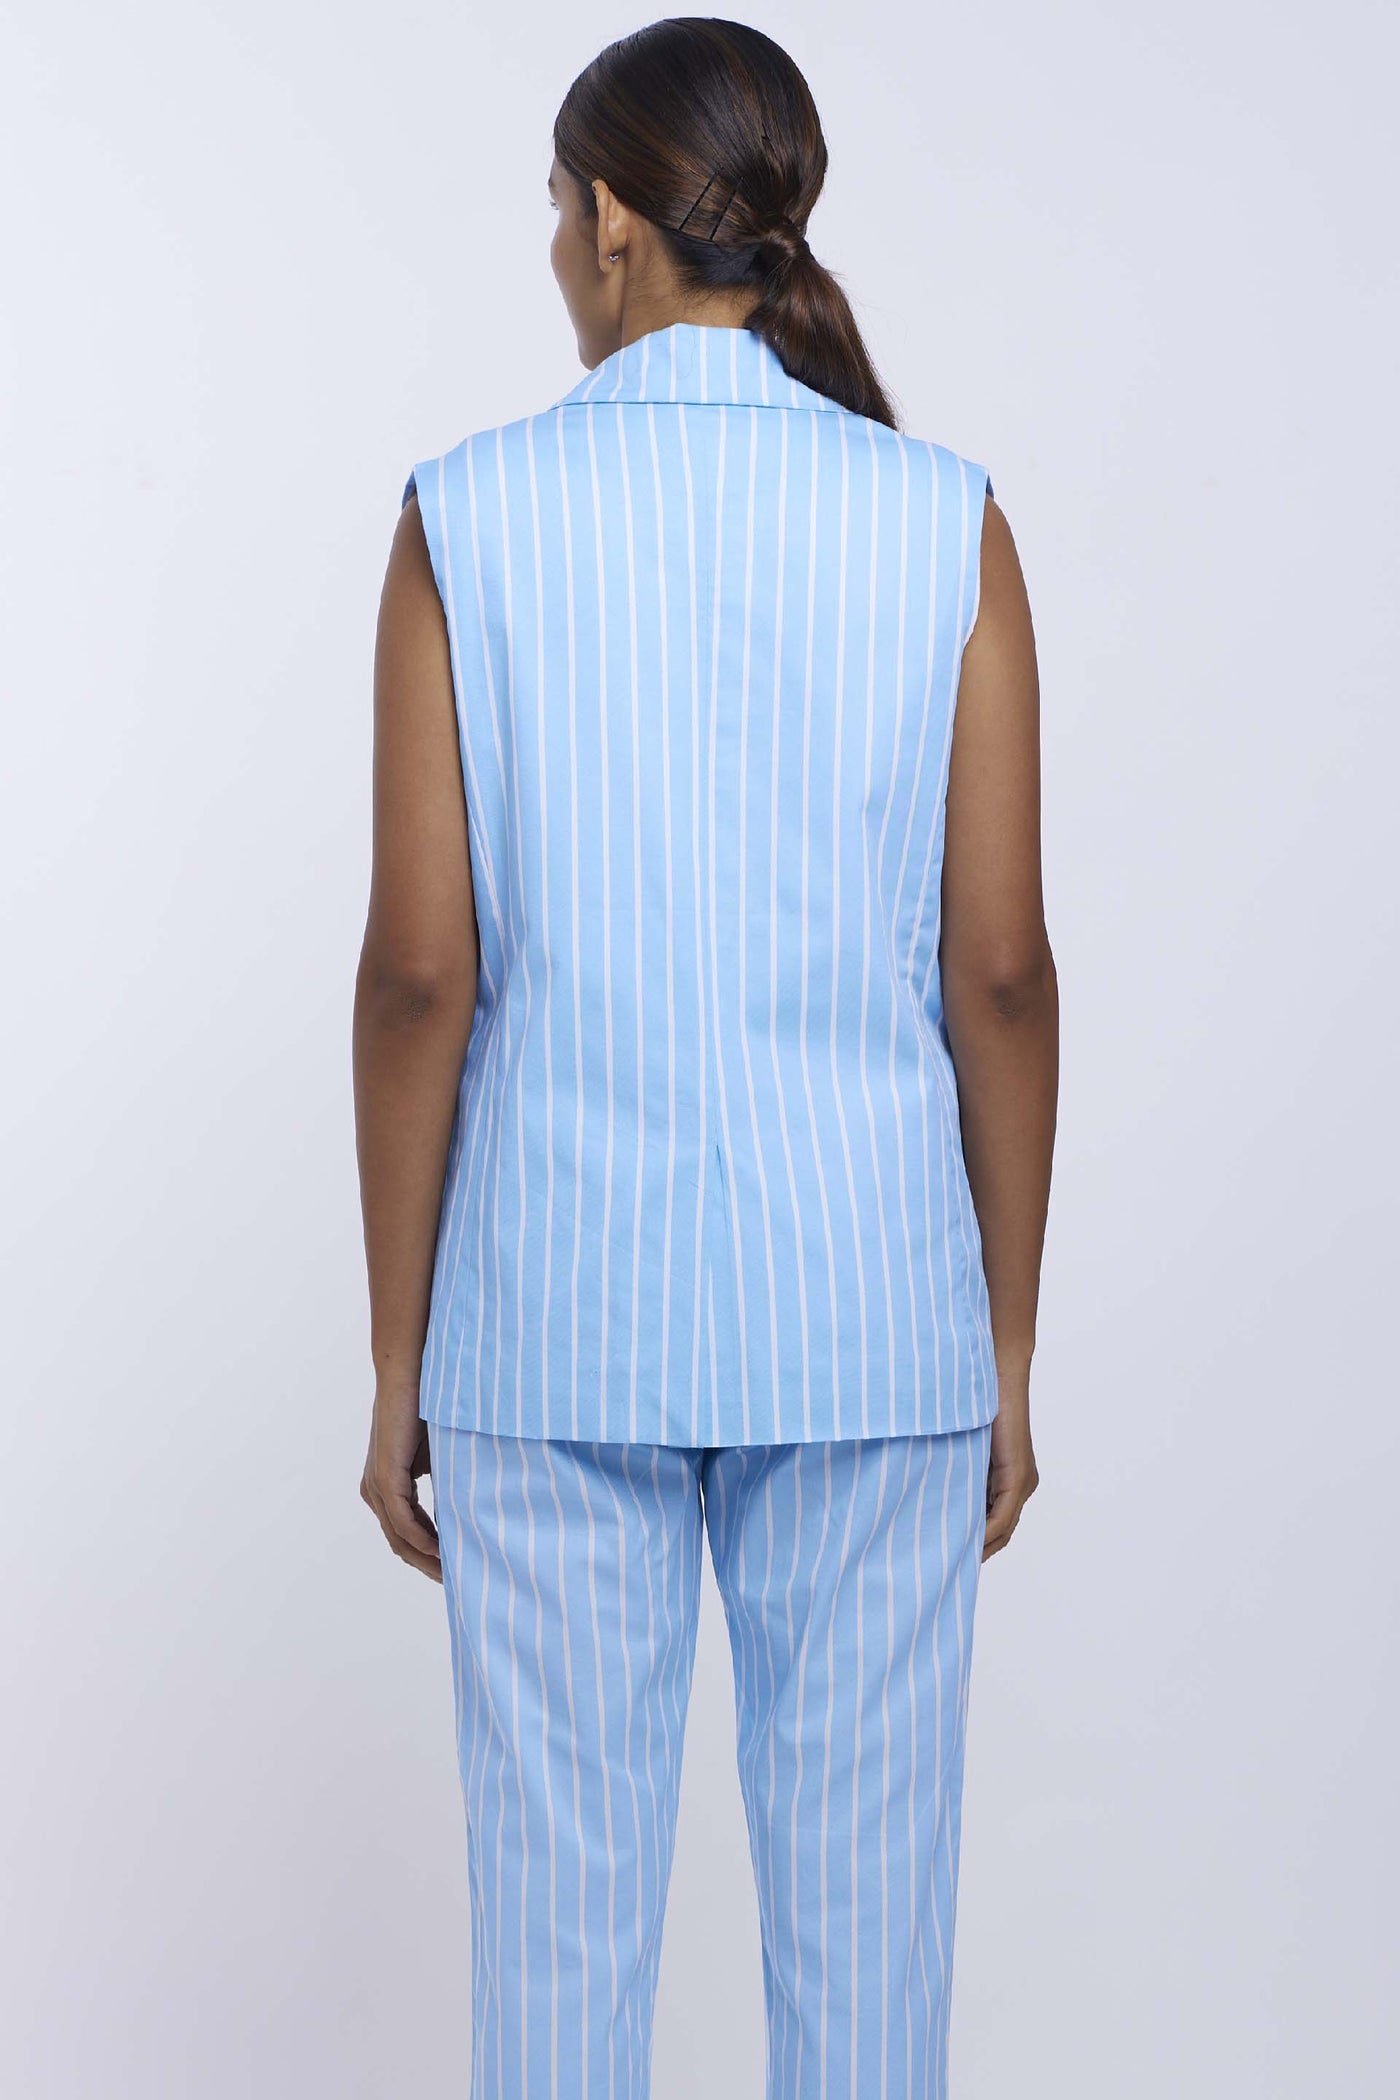 Pallavi Swadi Blue Stripe Blazer Set indian designer online shopping melange singapore